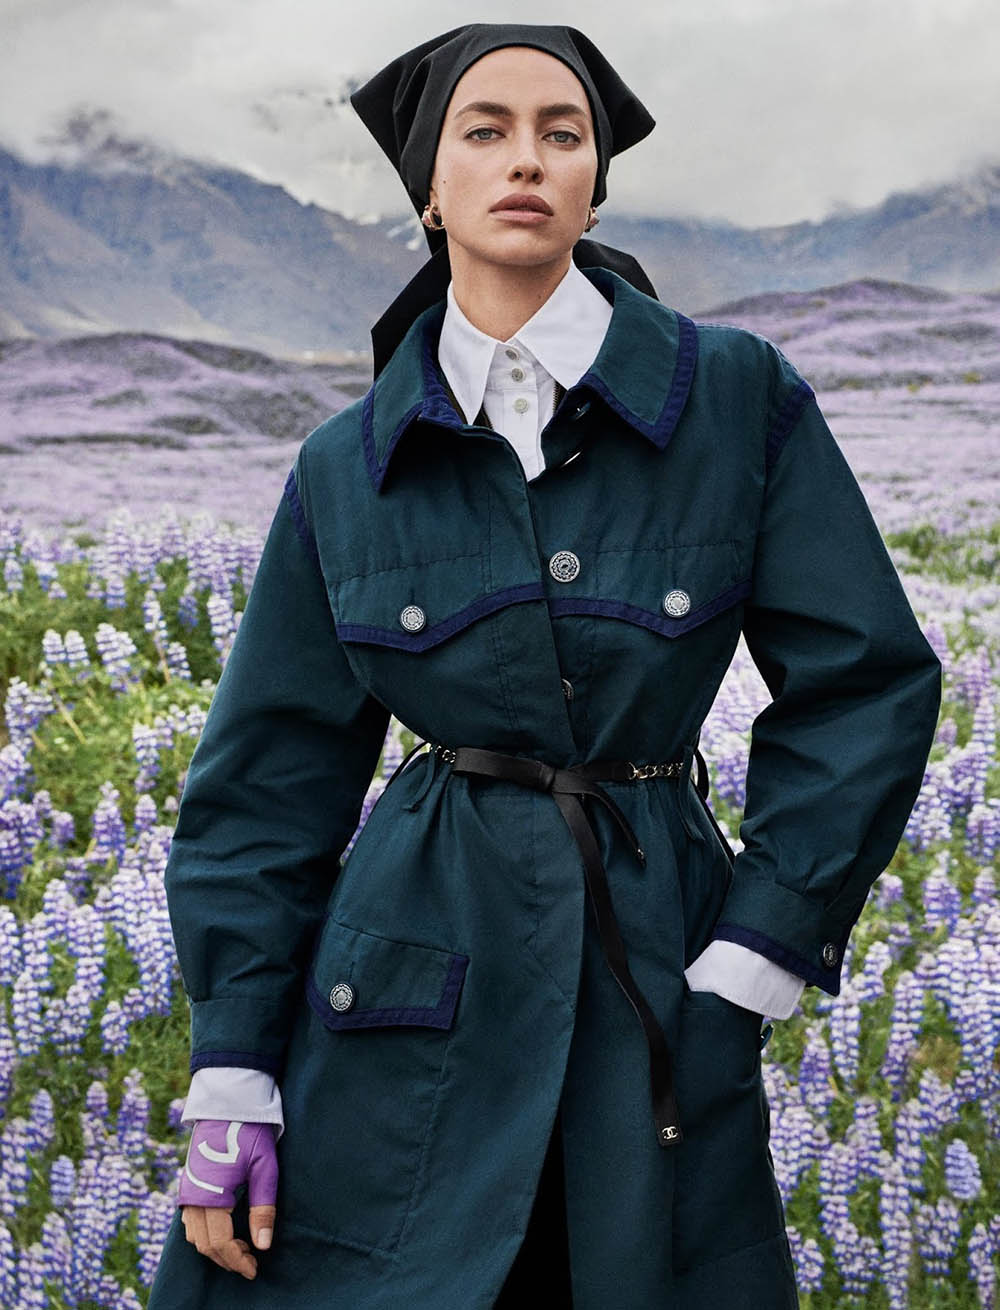 Irina Shayk covers Vogue Japan February 2020 by Giampaolo Sgura